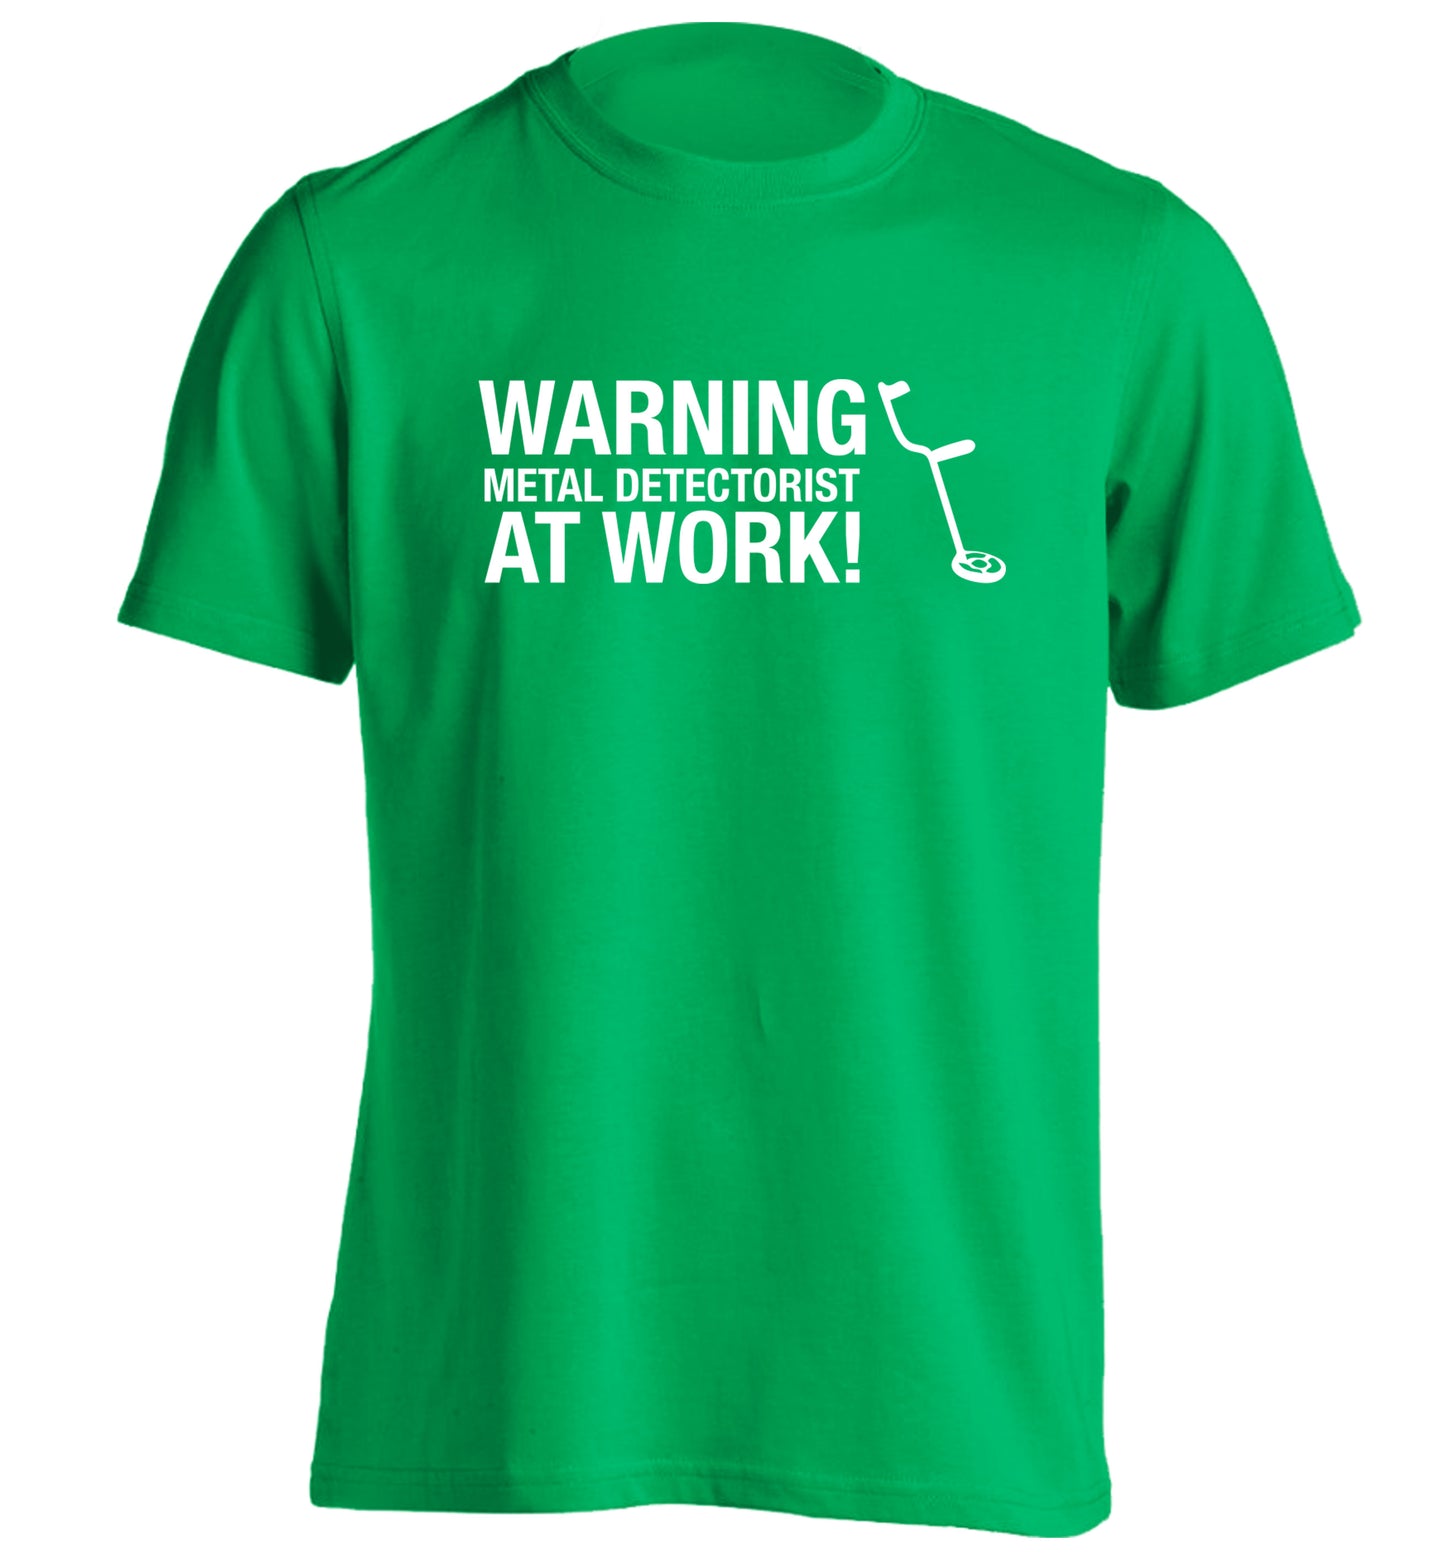 Warning metal detectorist at work! adults unisex green Tshirt 2XL